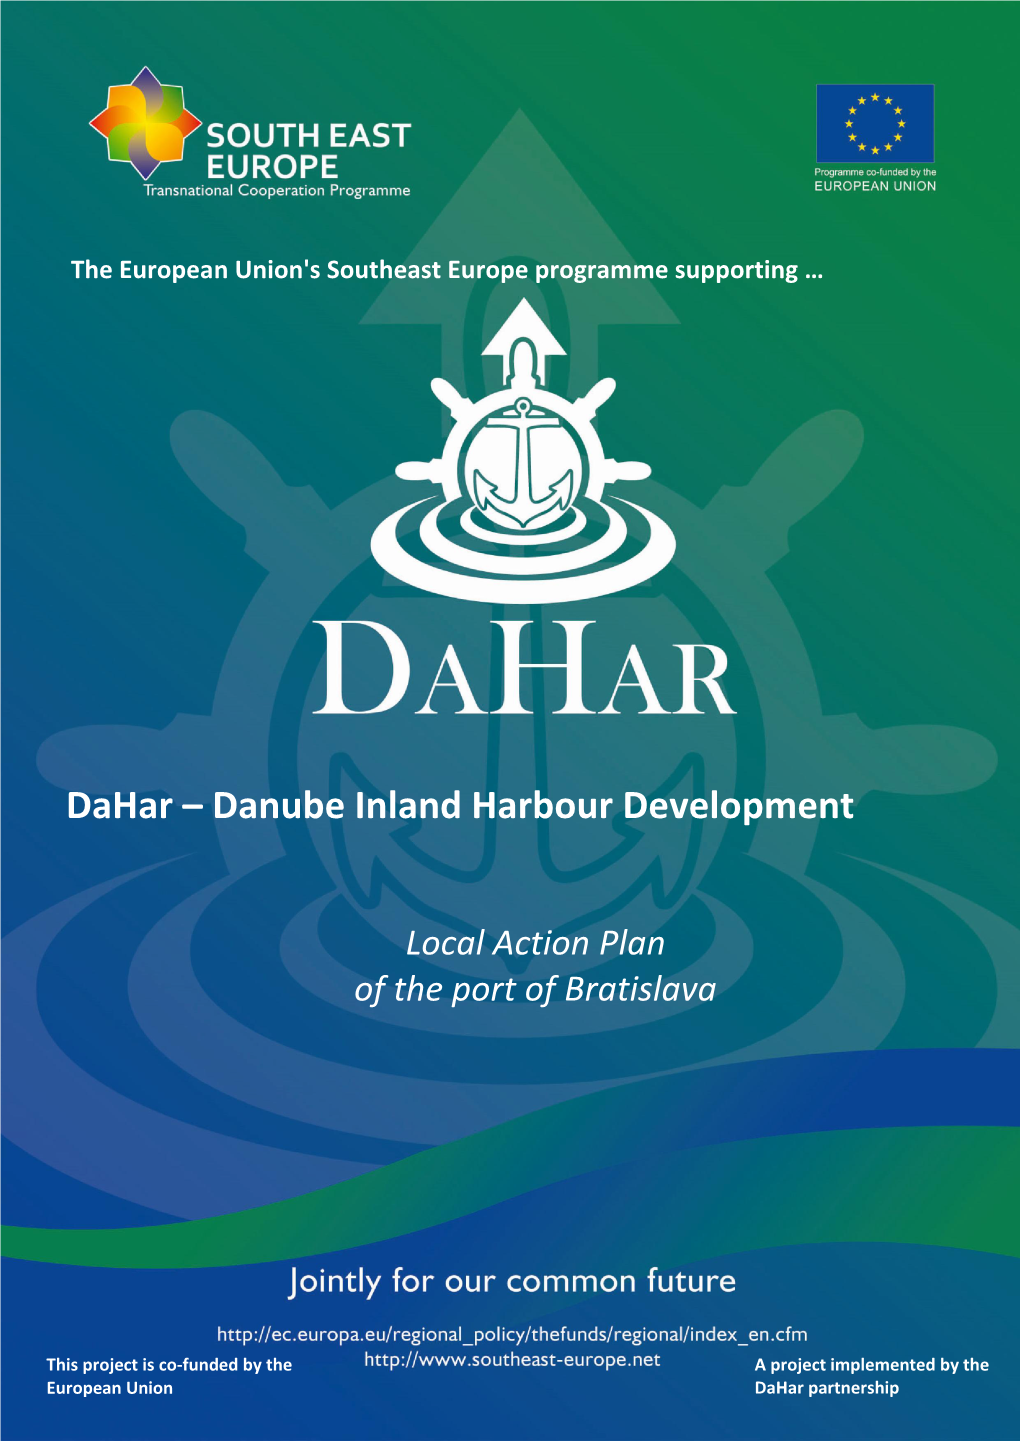 Dahar – Danube Inland Harbour Development